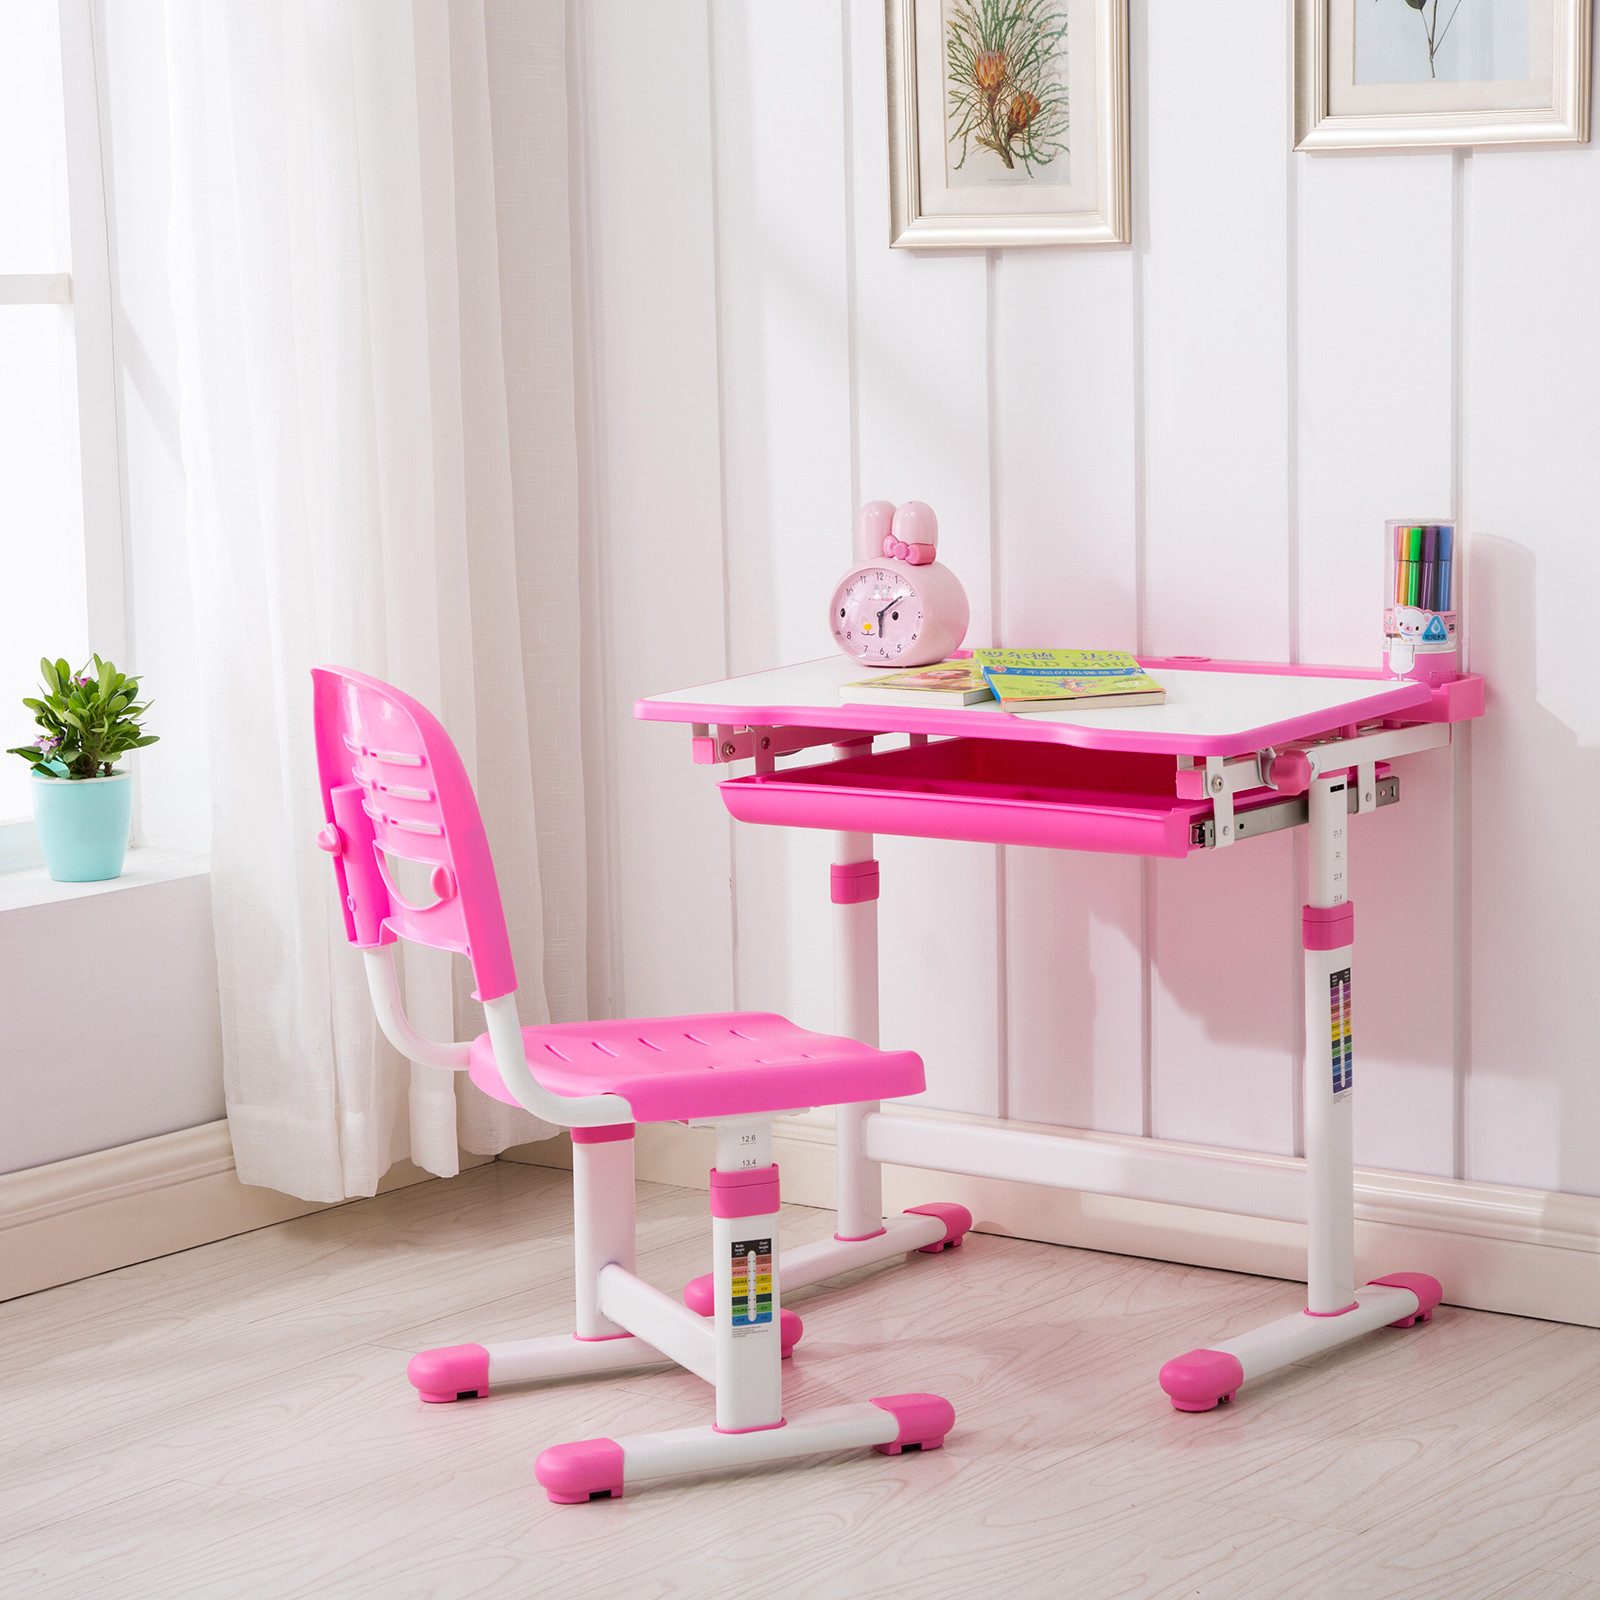 Kids Desk Chair
 Pink Adjustable Children s Desk and Chair Set Child Kids